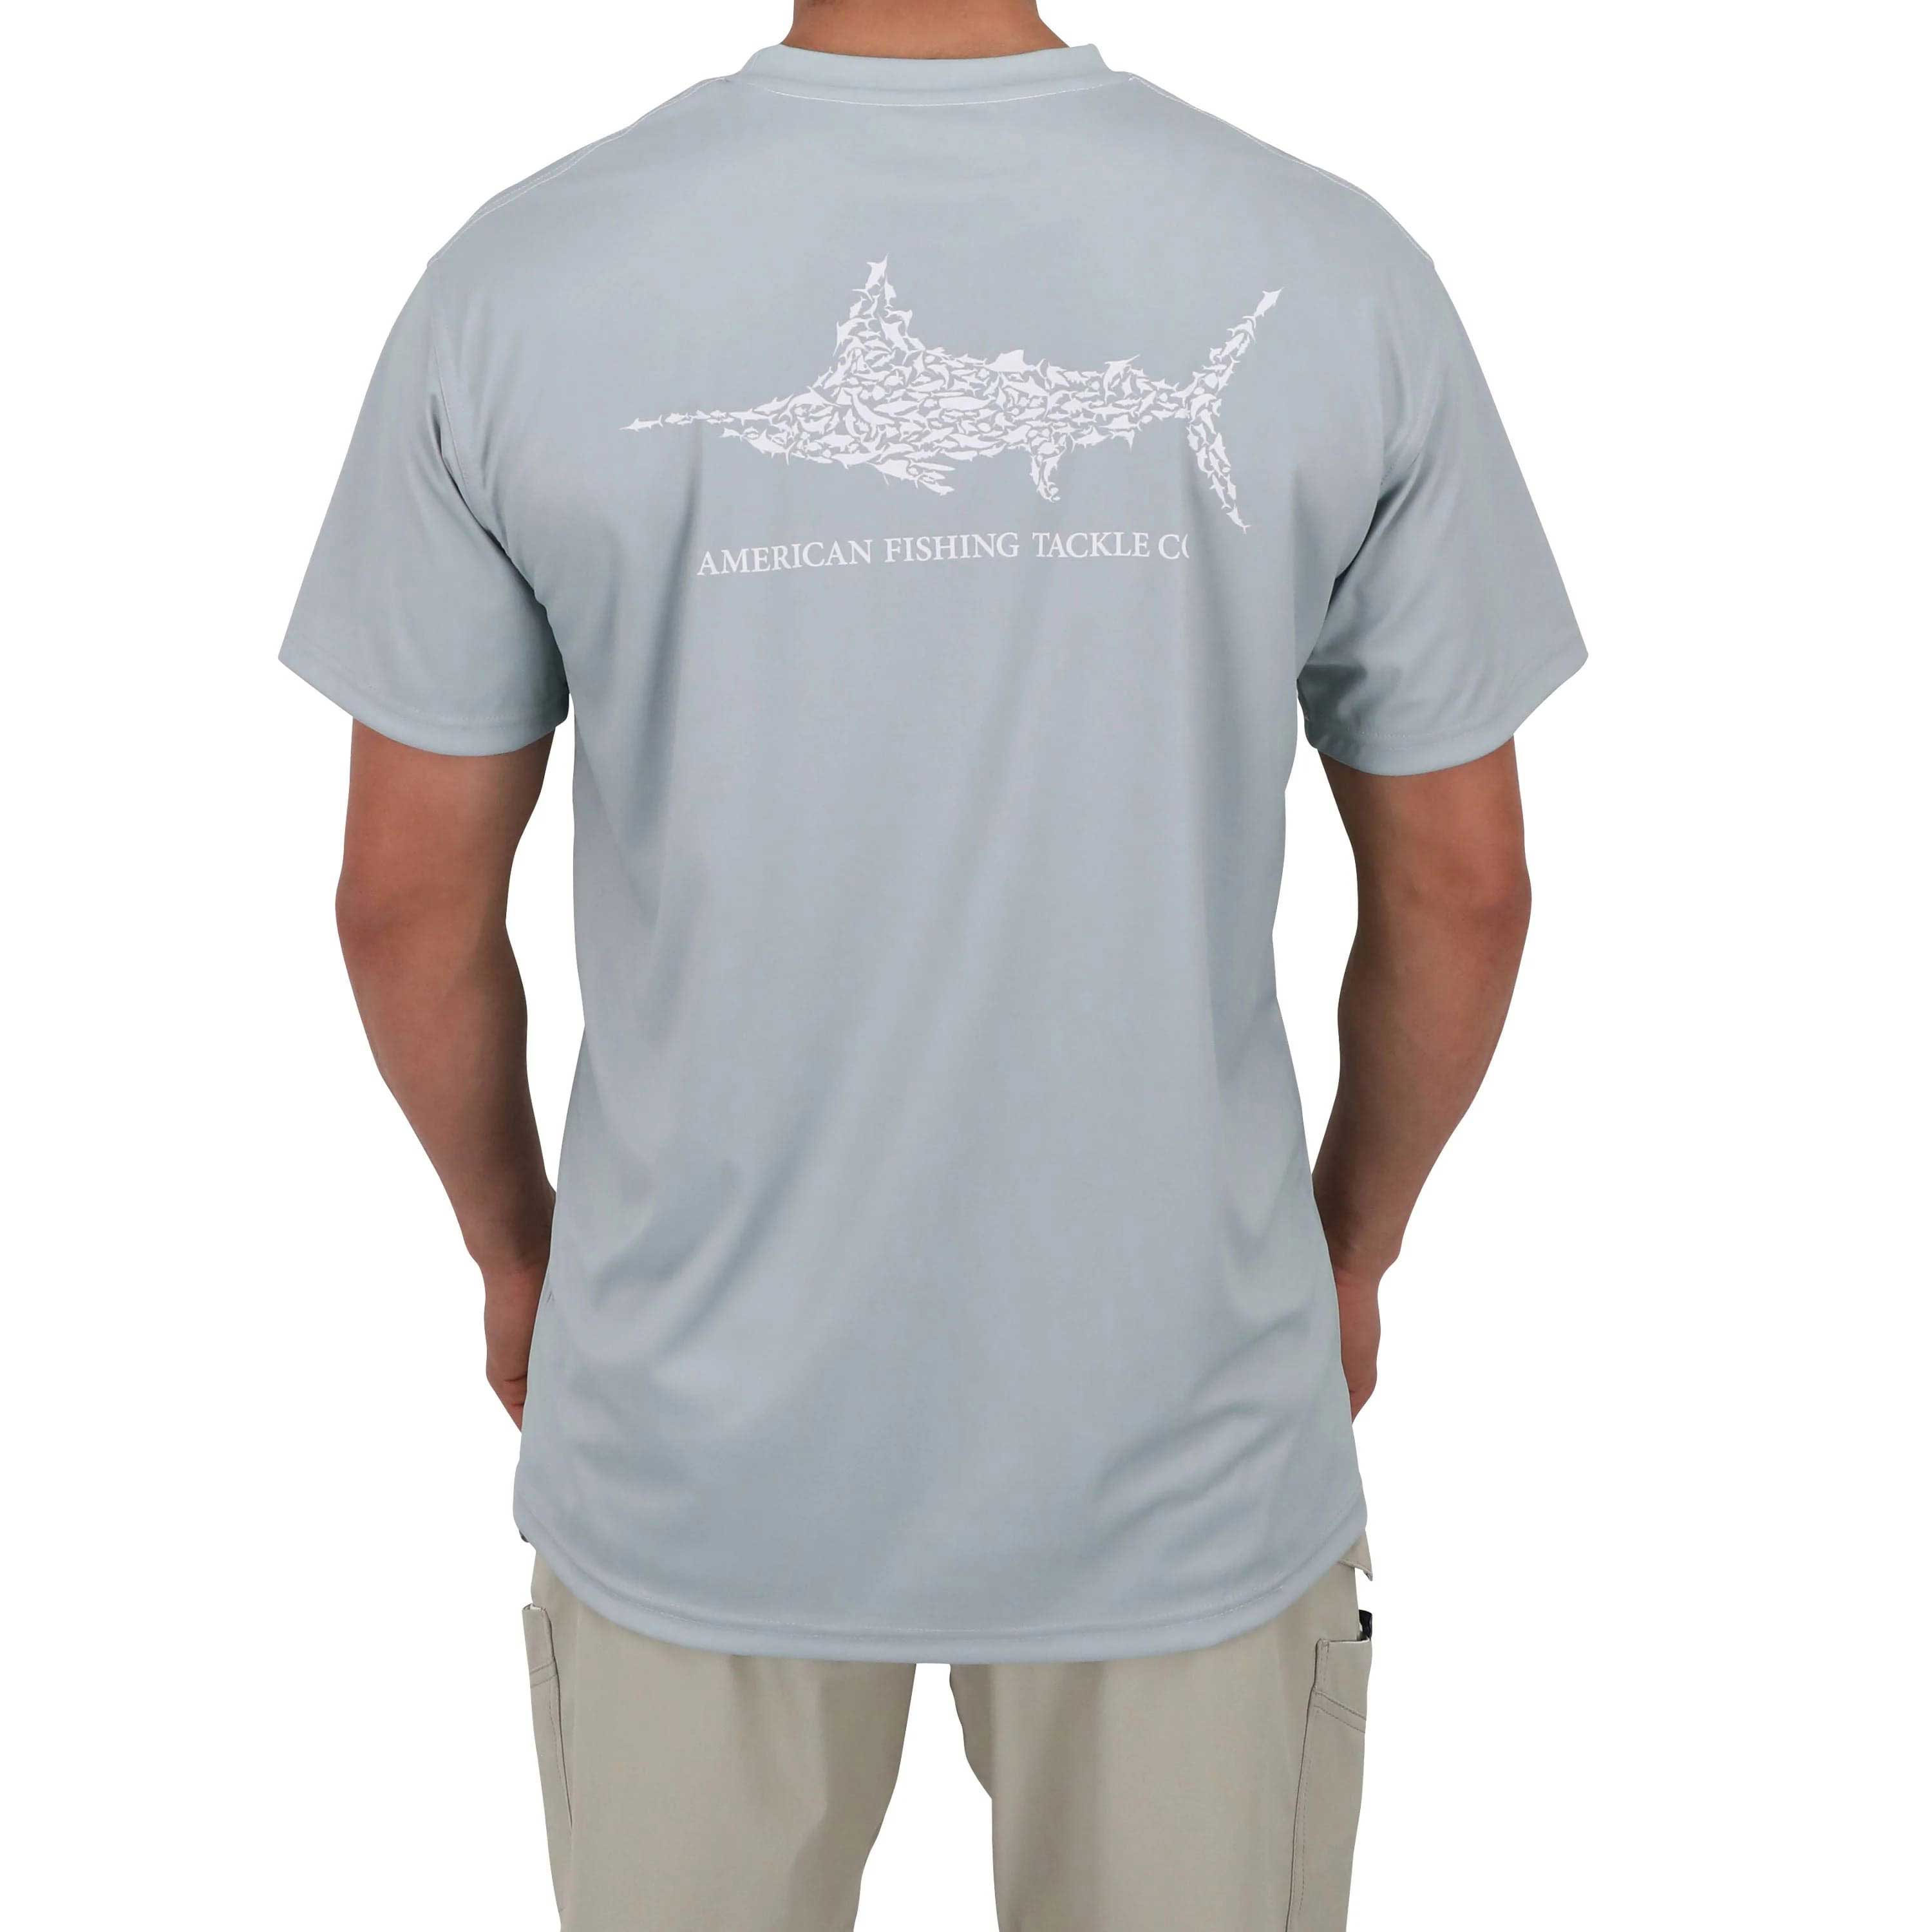 Performance fishing shirts - Aftco -Sun protecting shirts